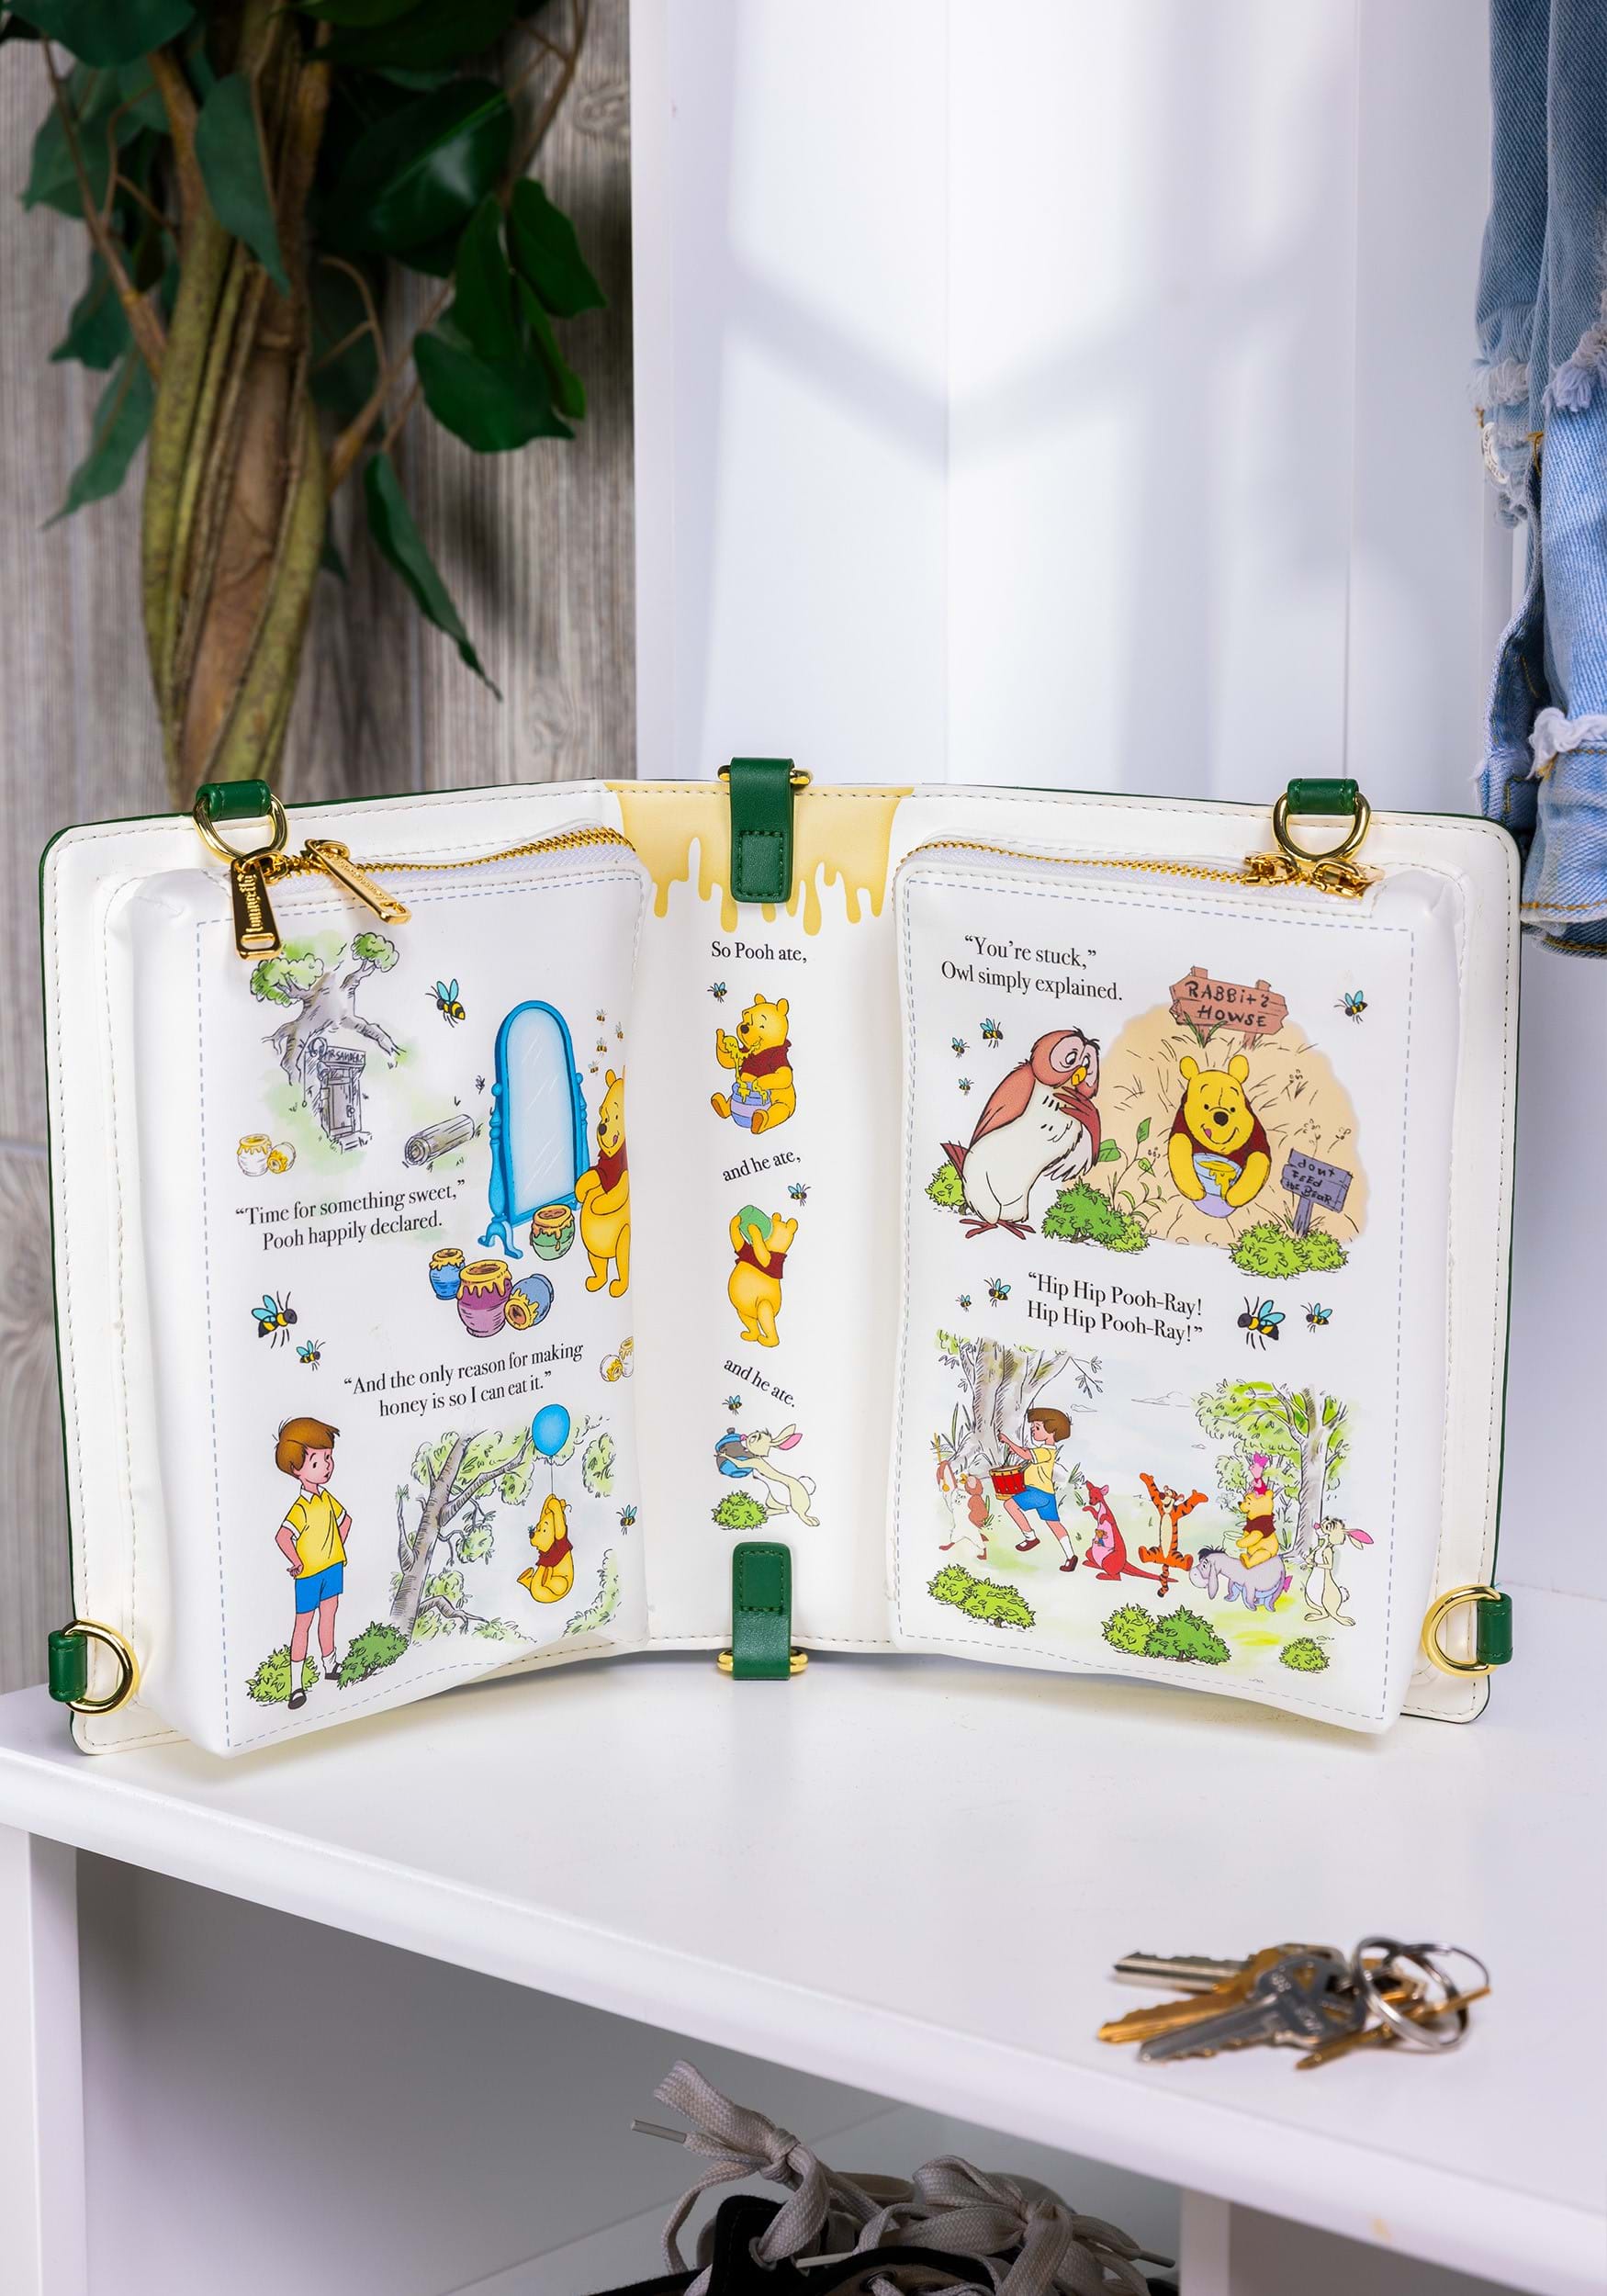 Loungefly Disney Winnie The Pooh Classic Book Convertible Crossbody Purse